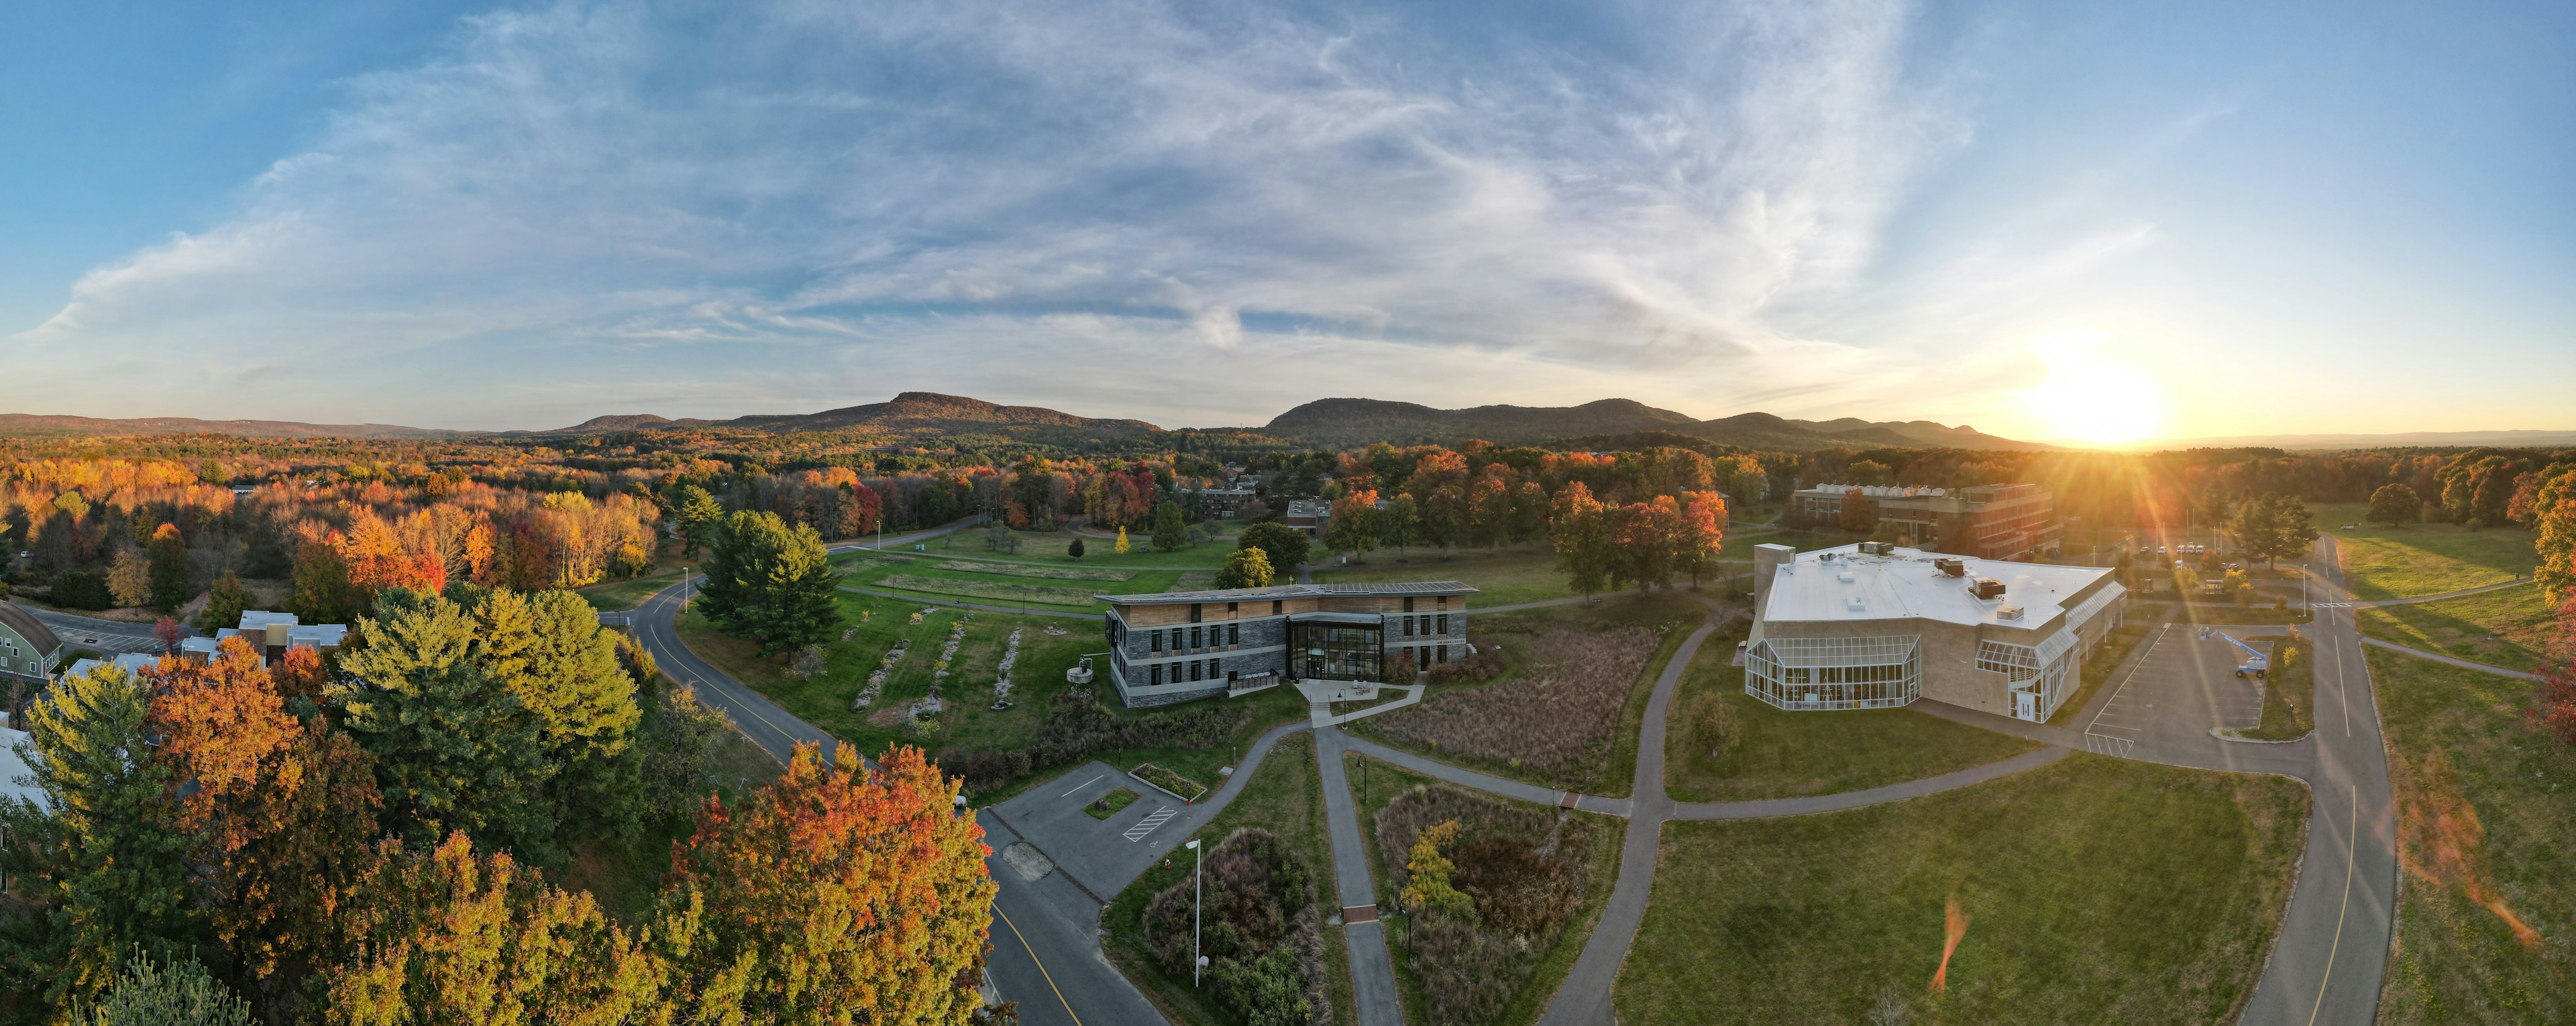 Drone Picture of Hampshire College